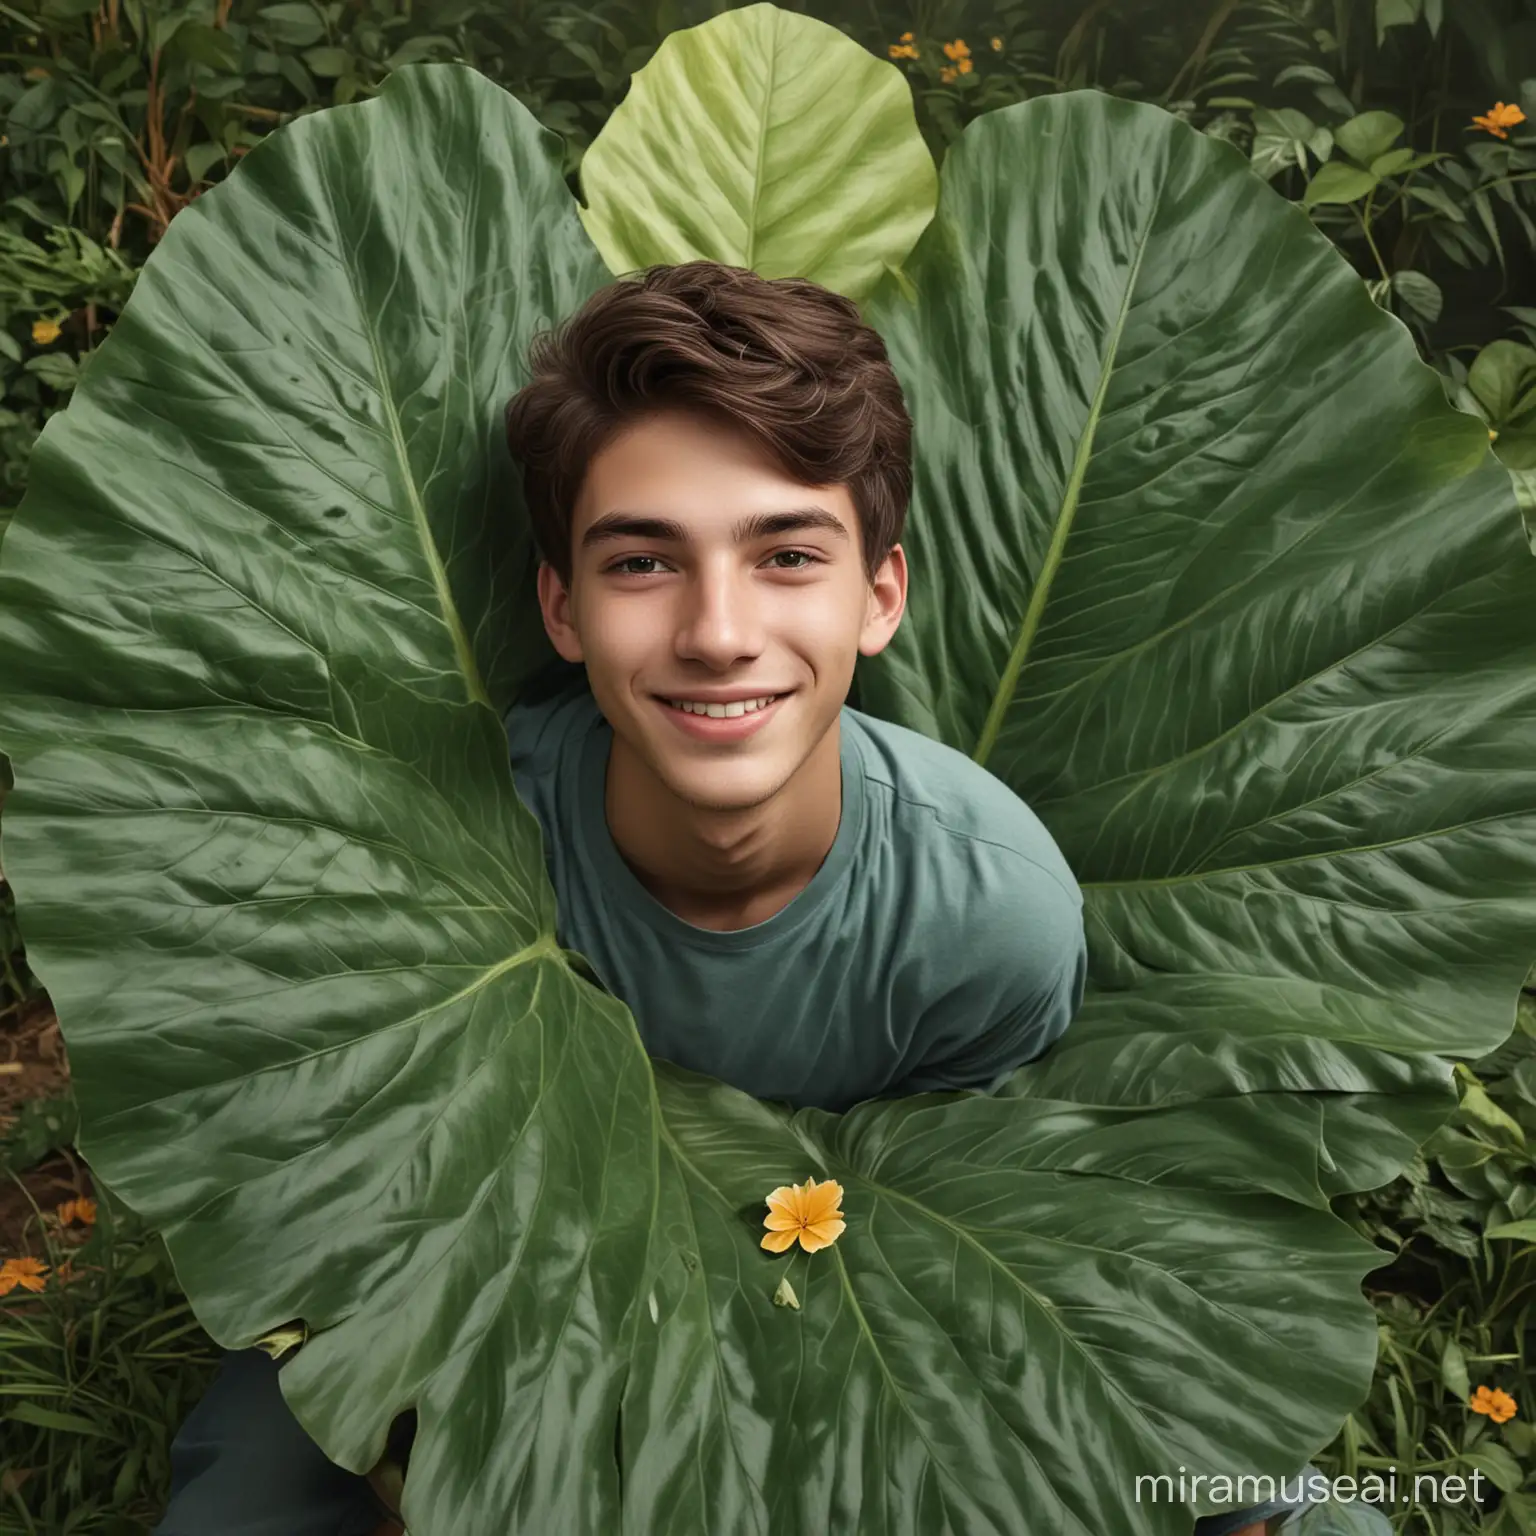 Smiling Teenage Boy Sitting on Enormous Floral Leaf Ultra Realistic Portrait